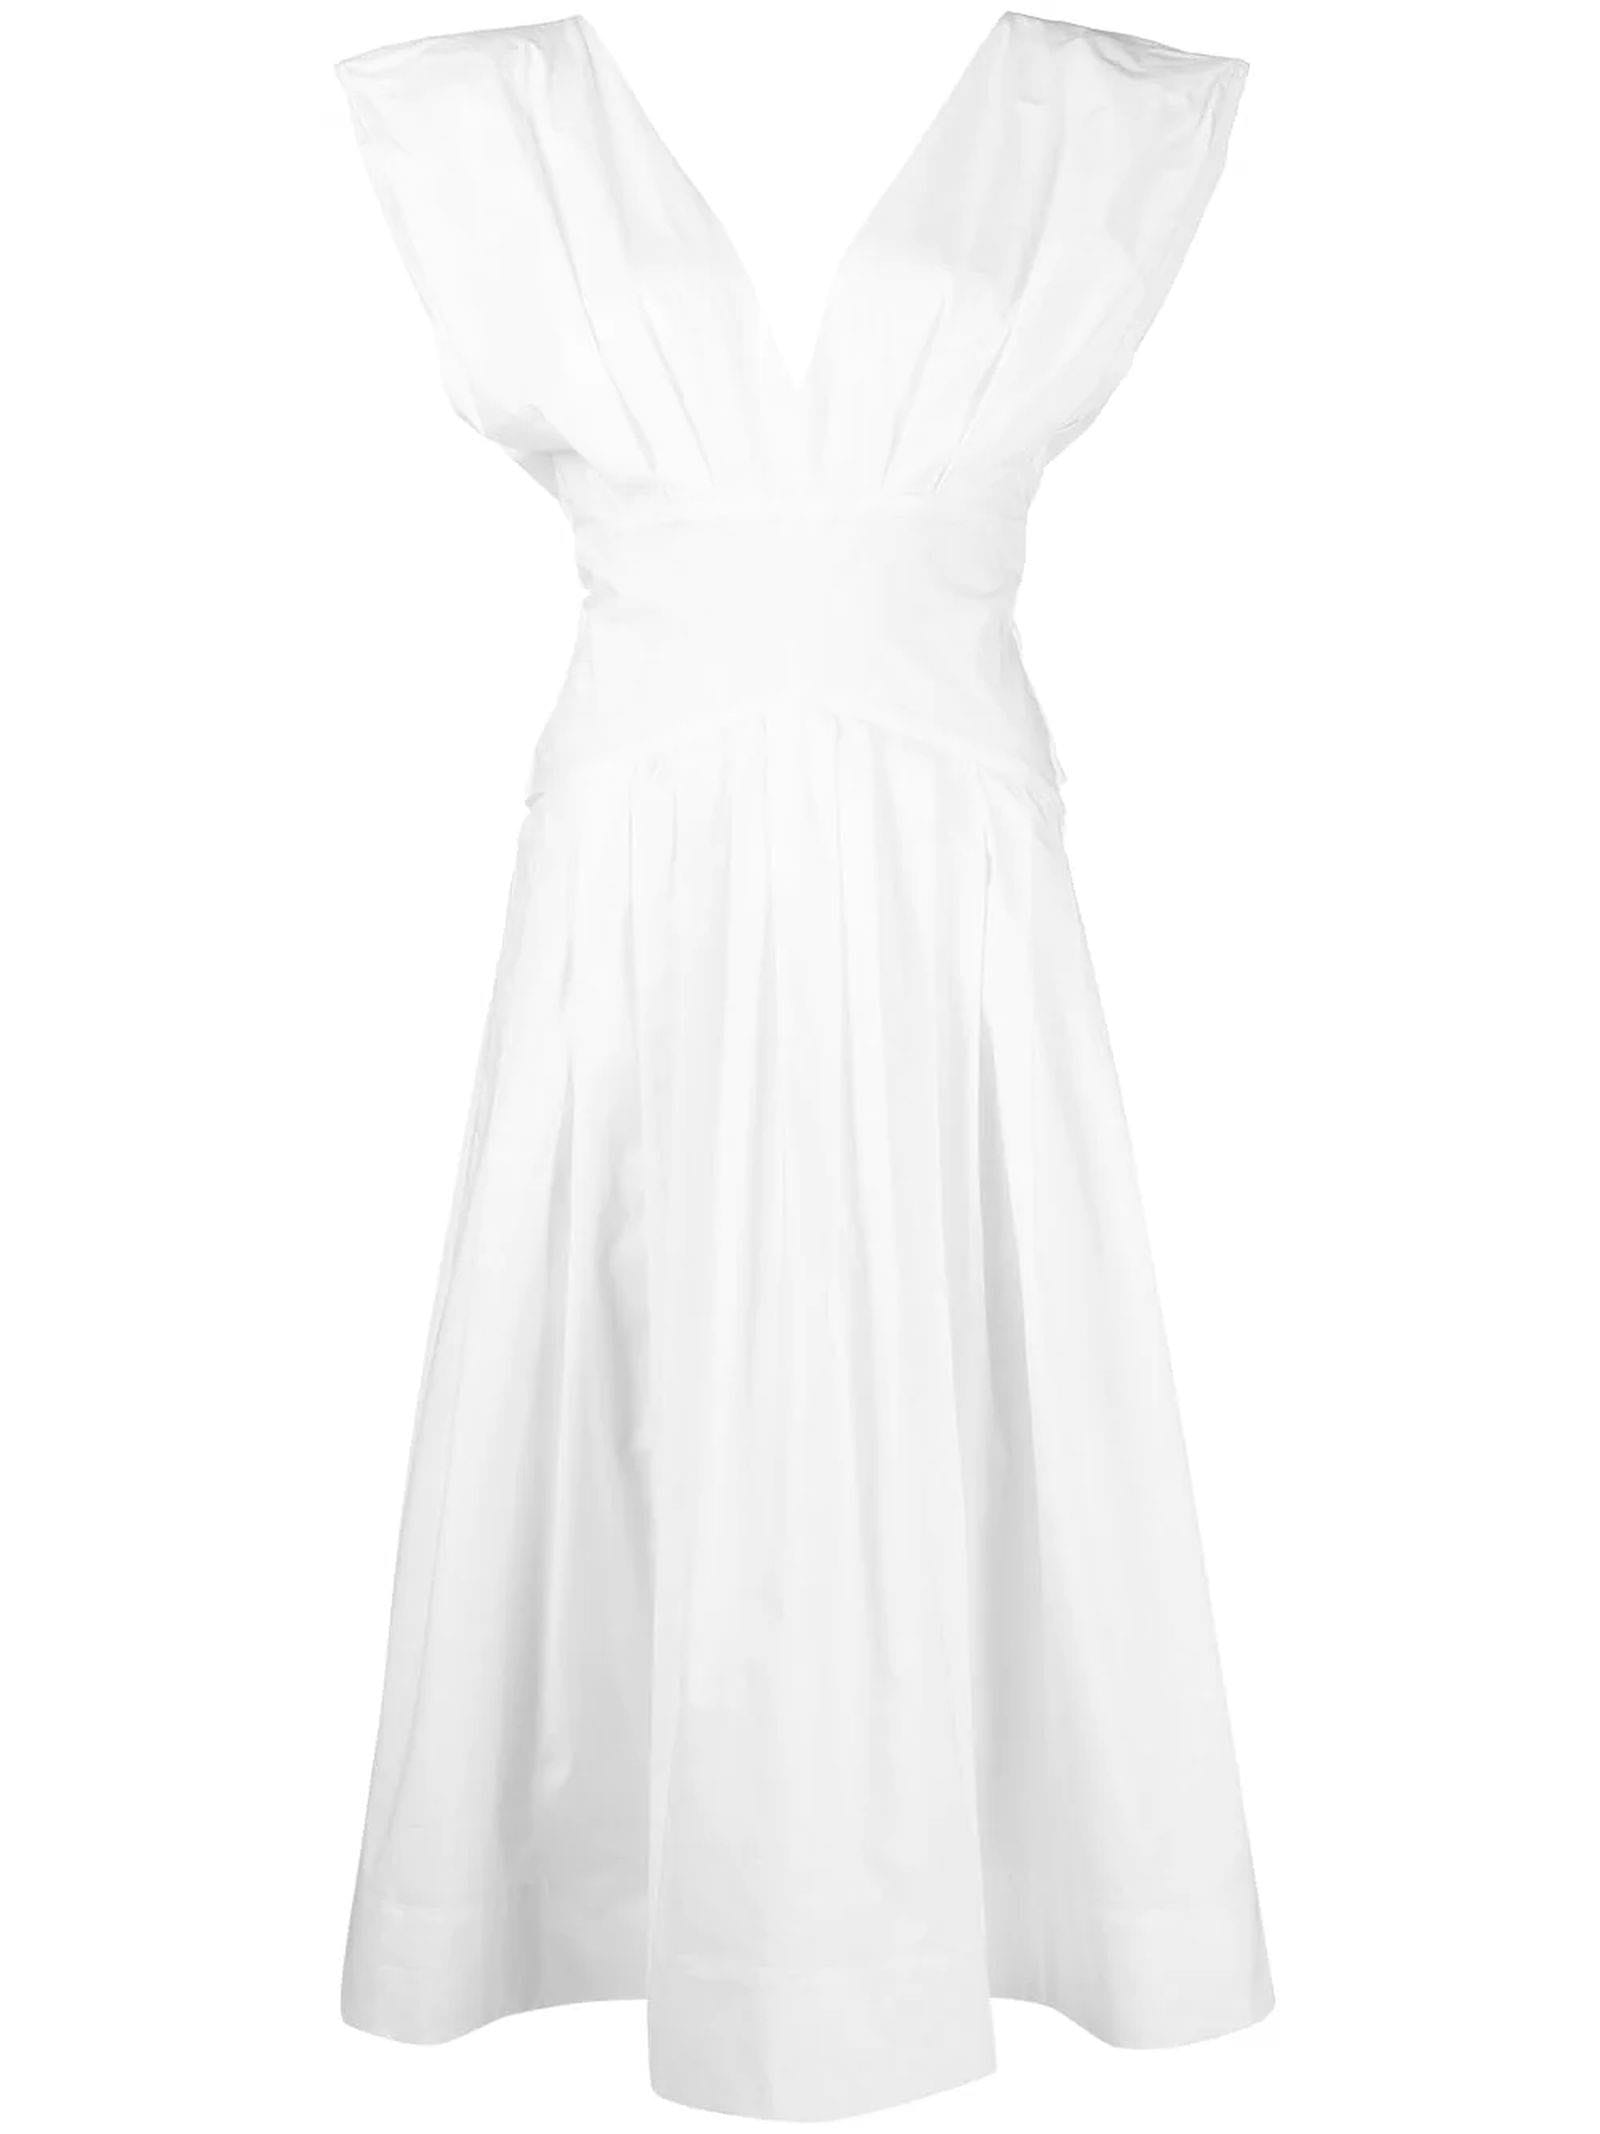 Philosophy di Lorenzo Serafini White Cotton Dress